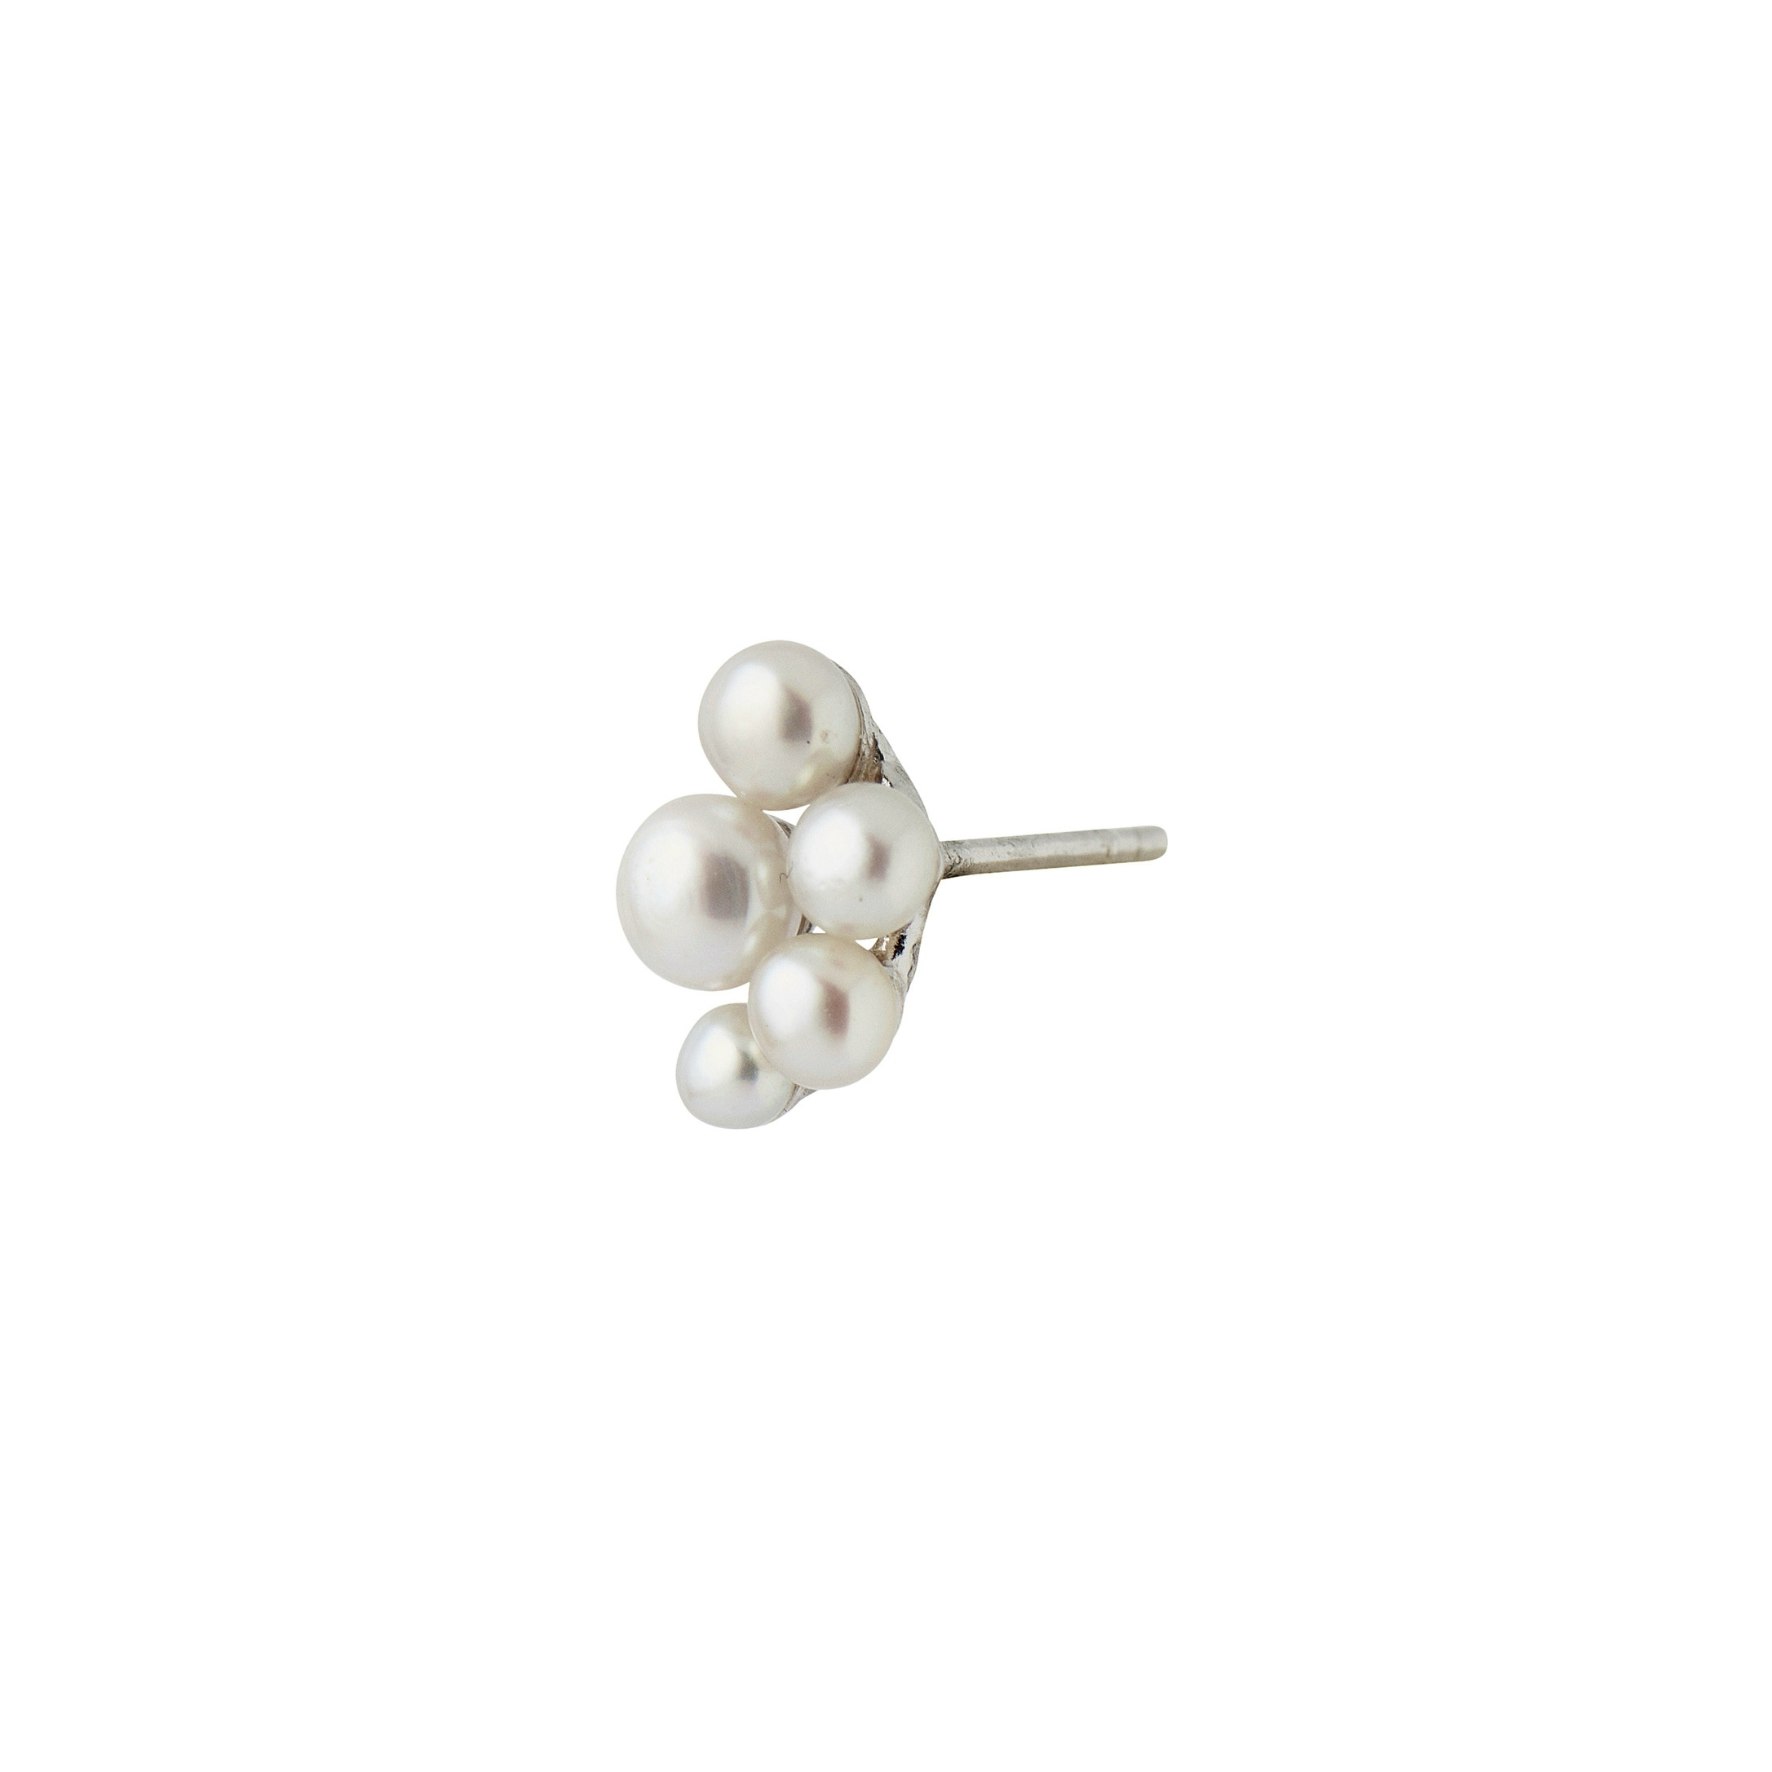 Bloom Berries Earring van STINE A Jewelry in Zilver Sterling 925